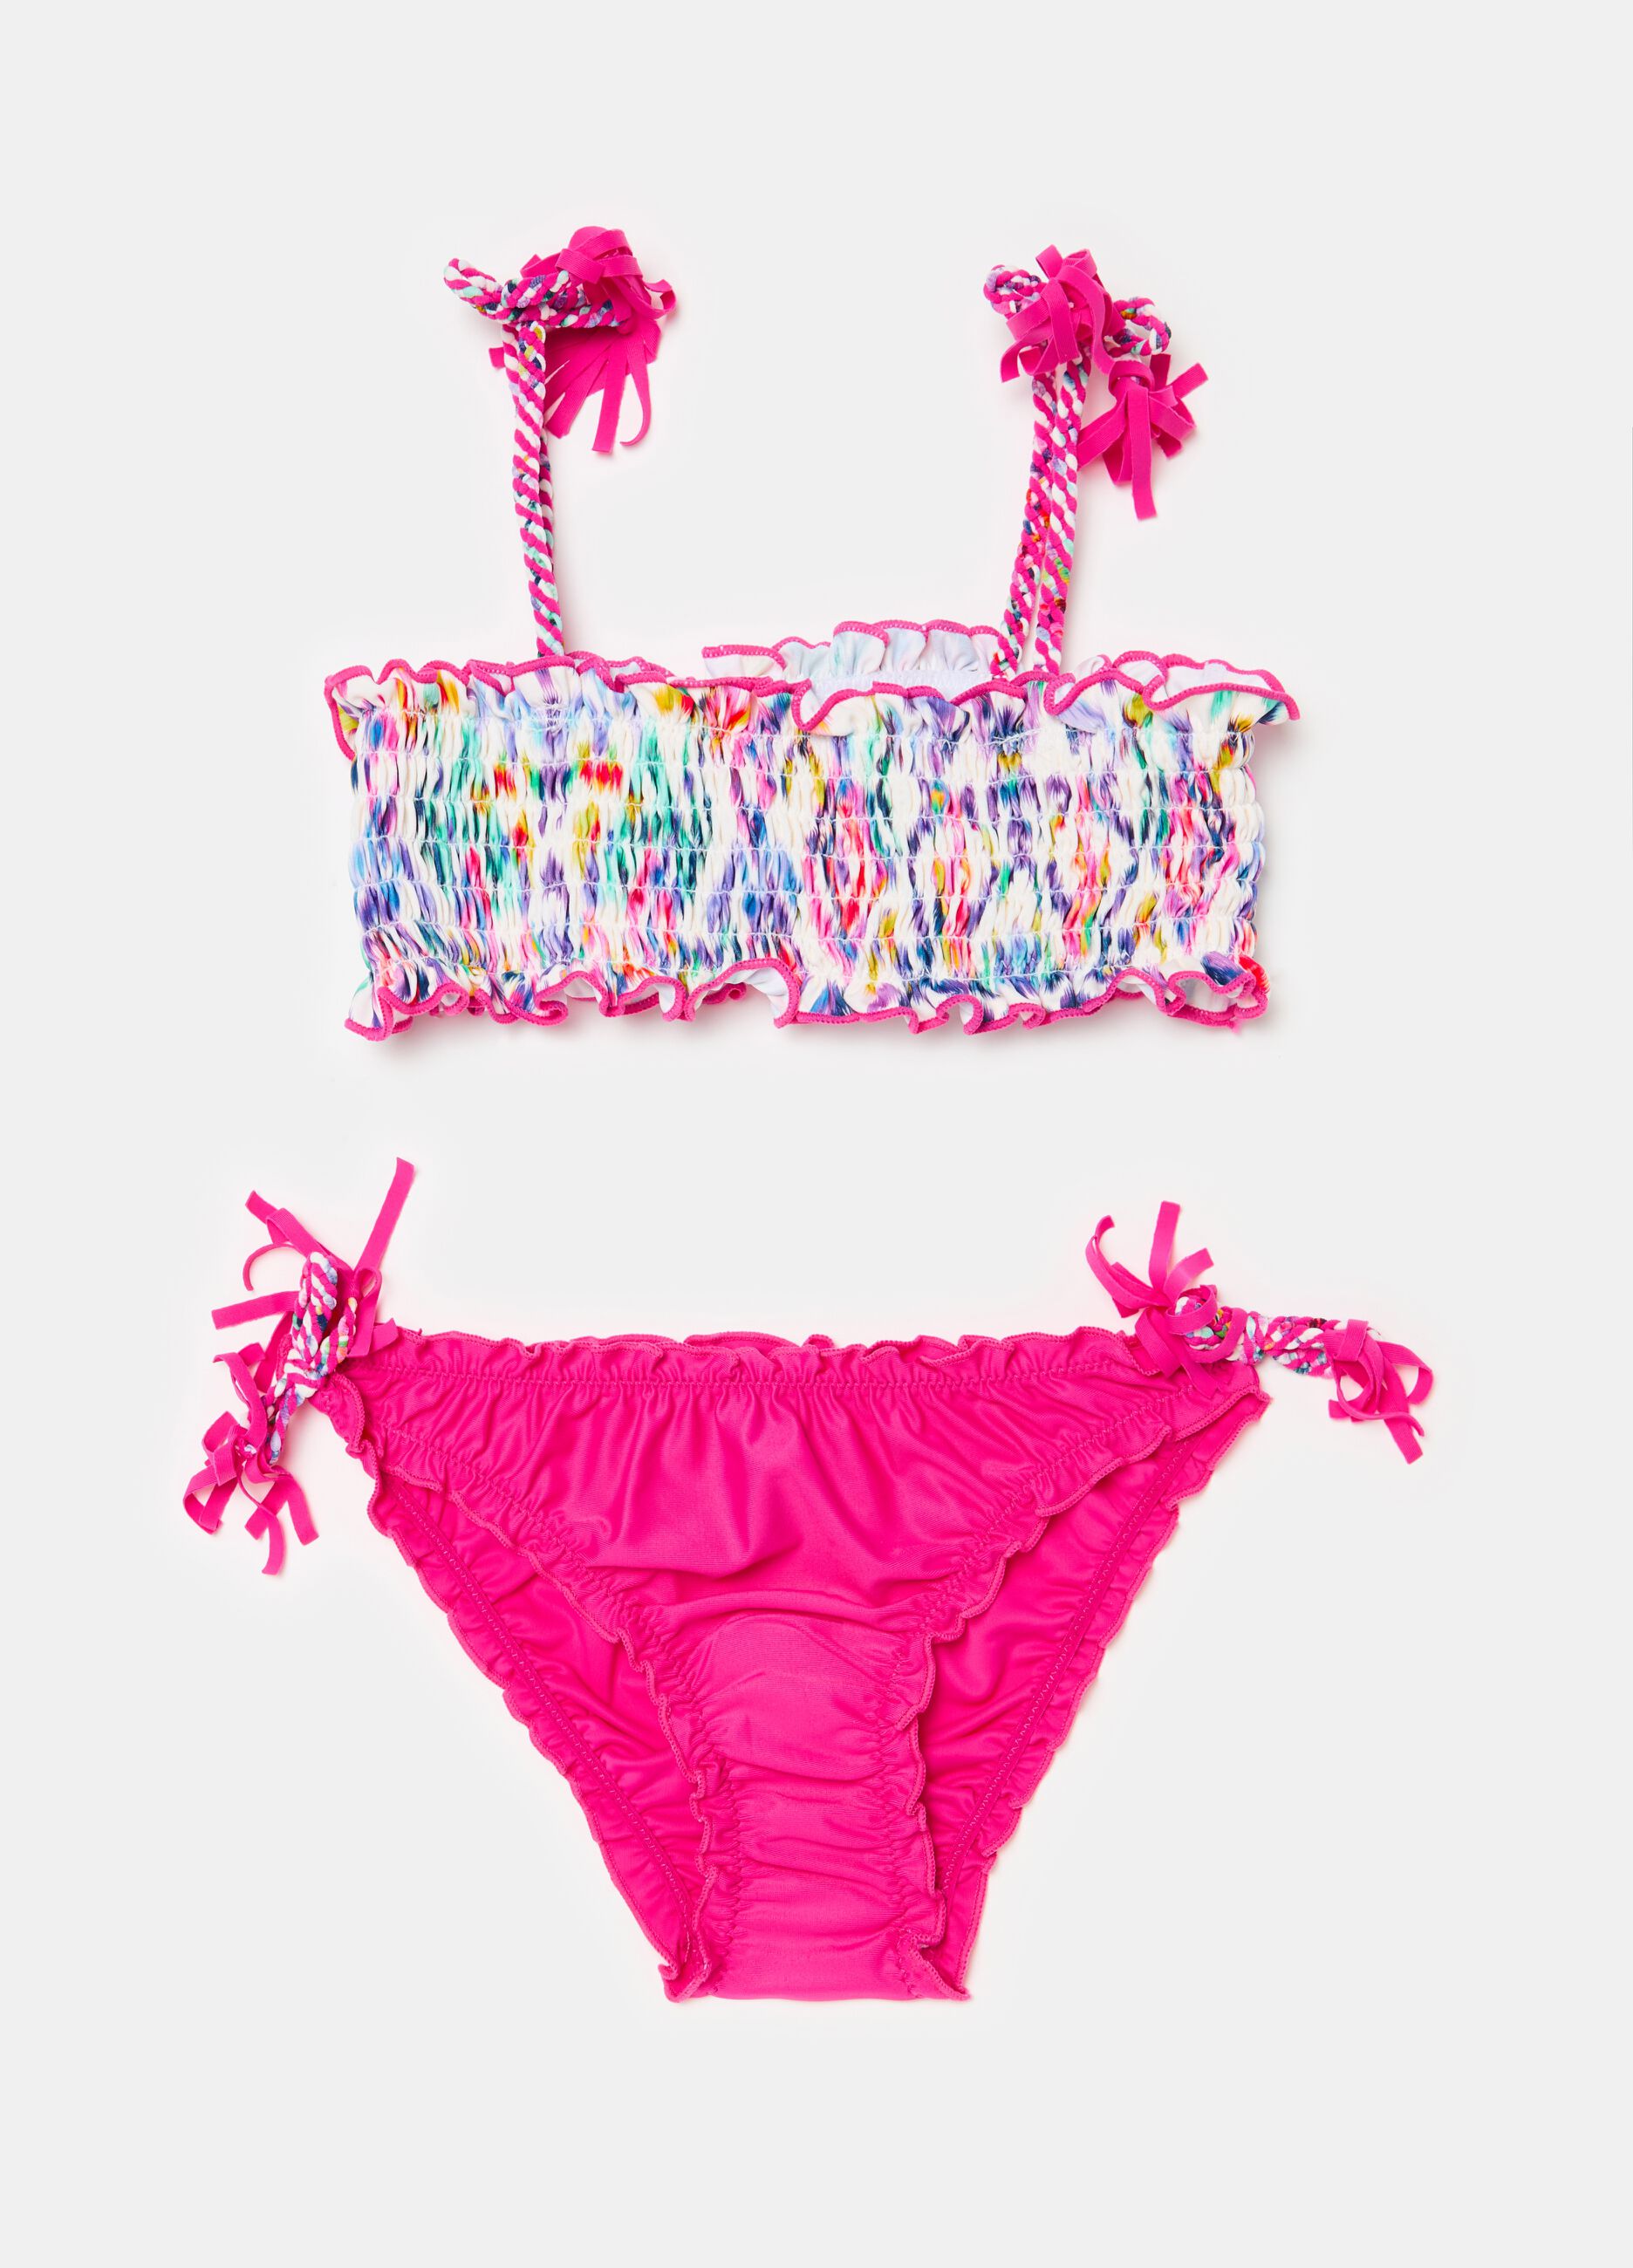 Bikini with tie-dye pattern and tassels